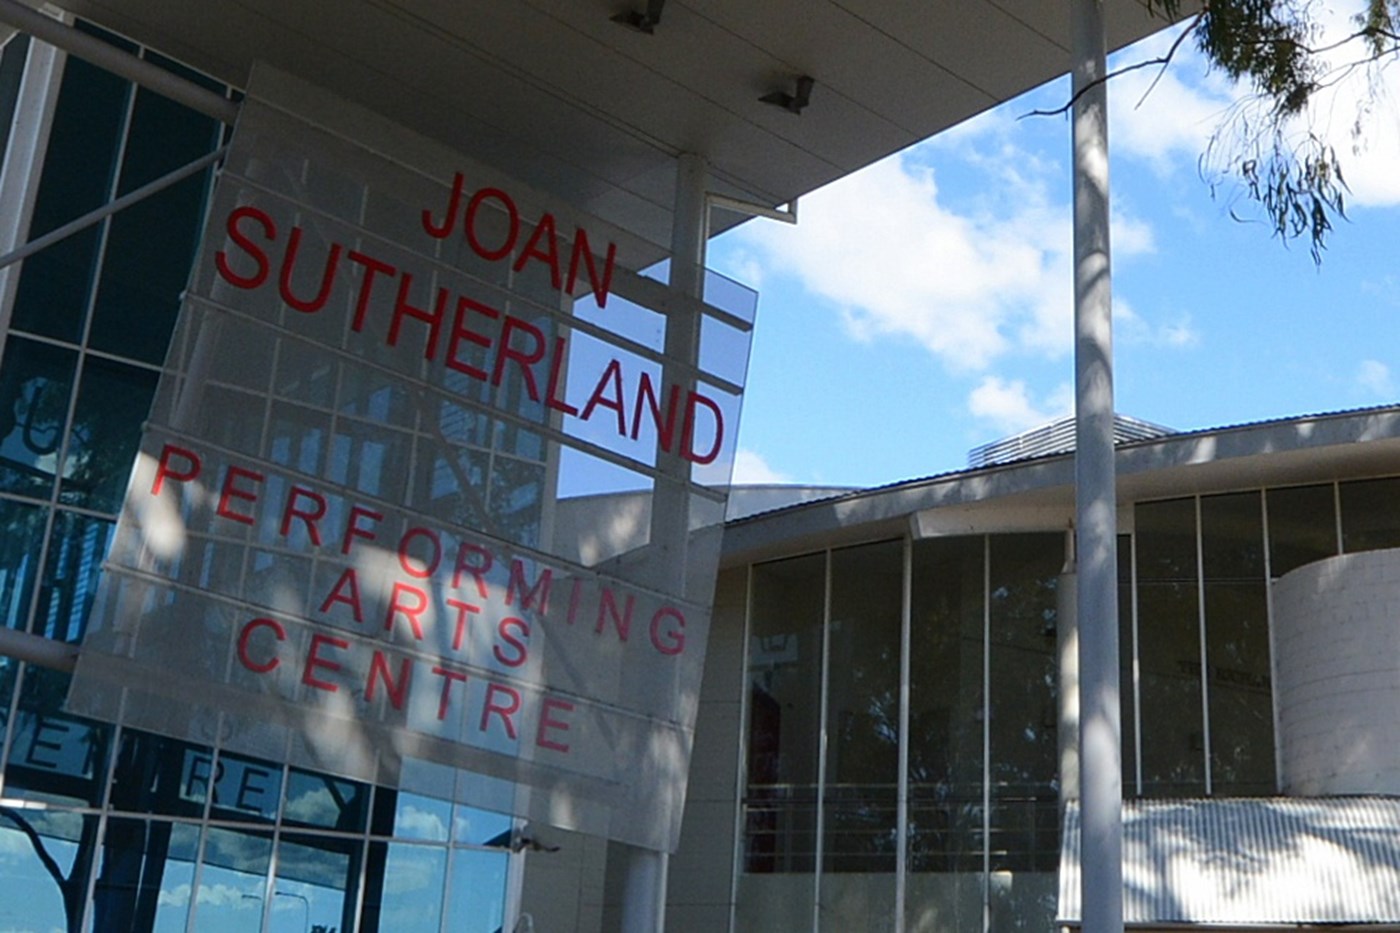 Joan Sutherland Performing Arts Centre